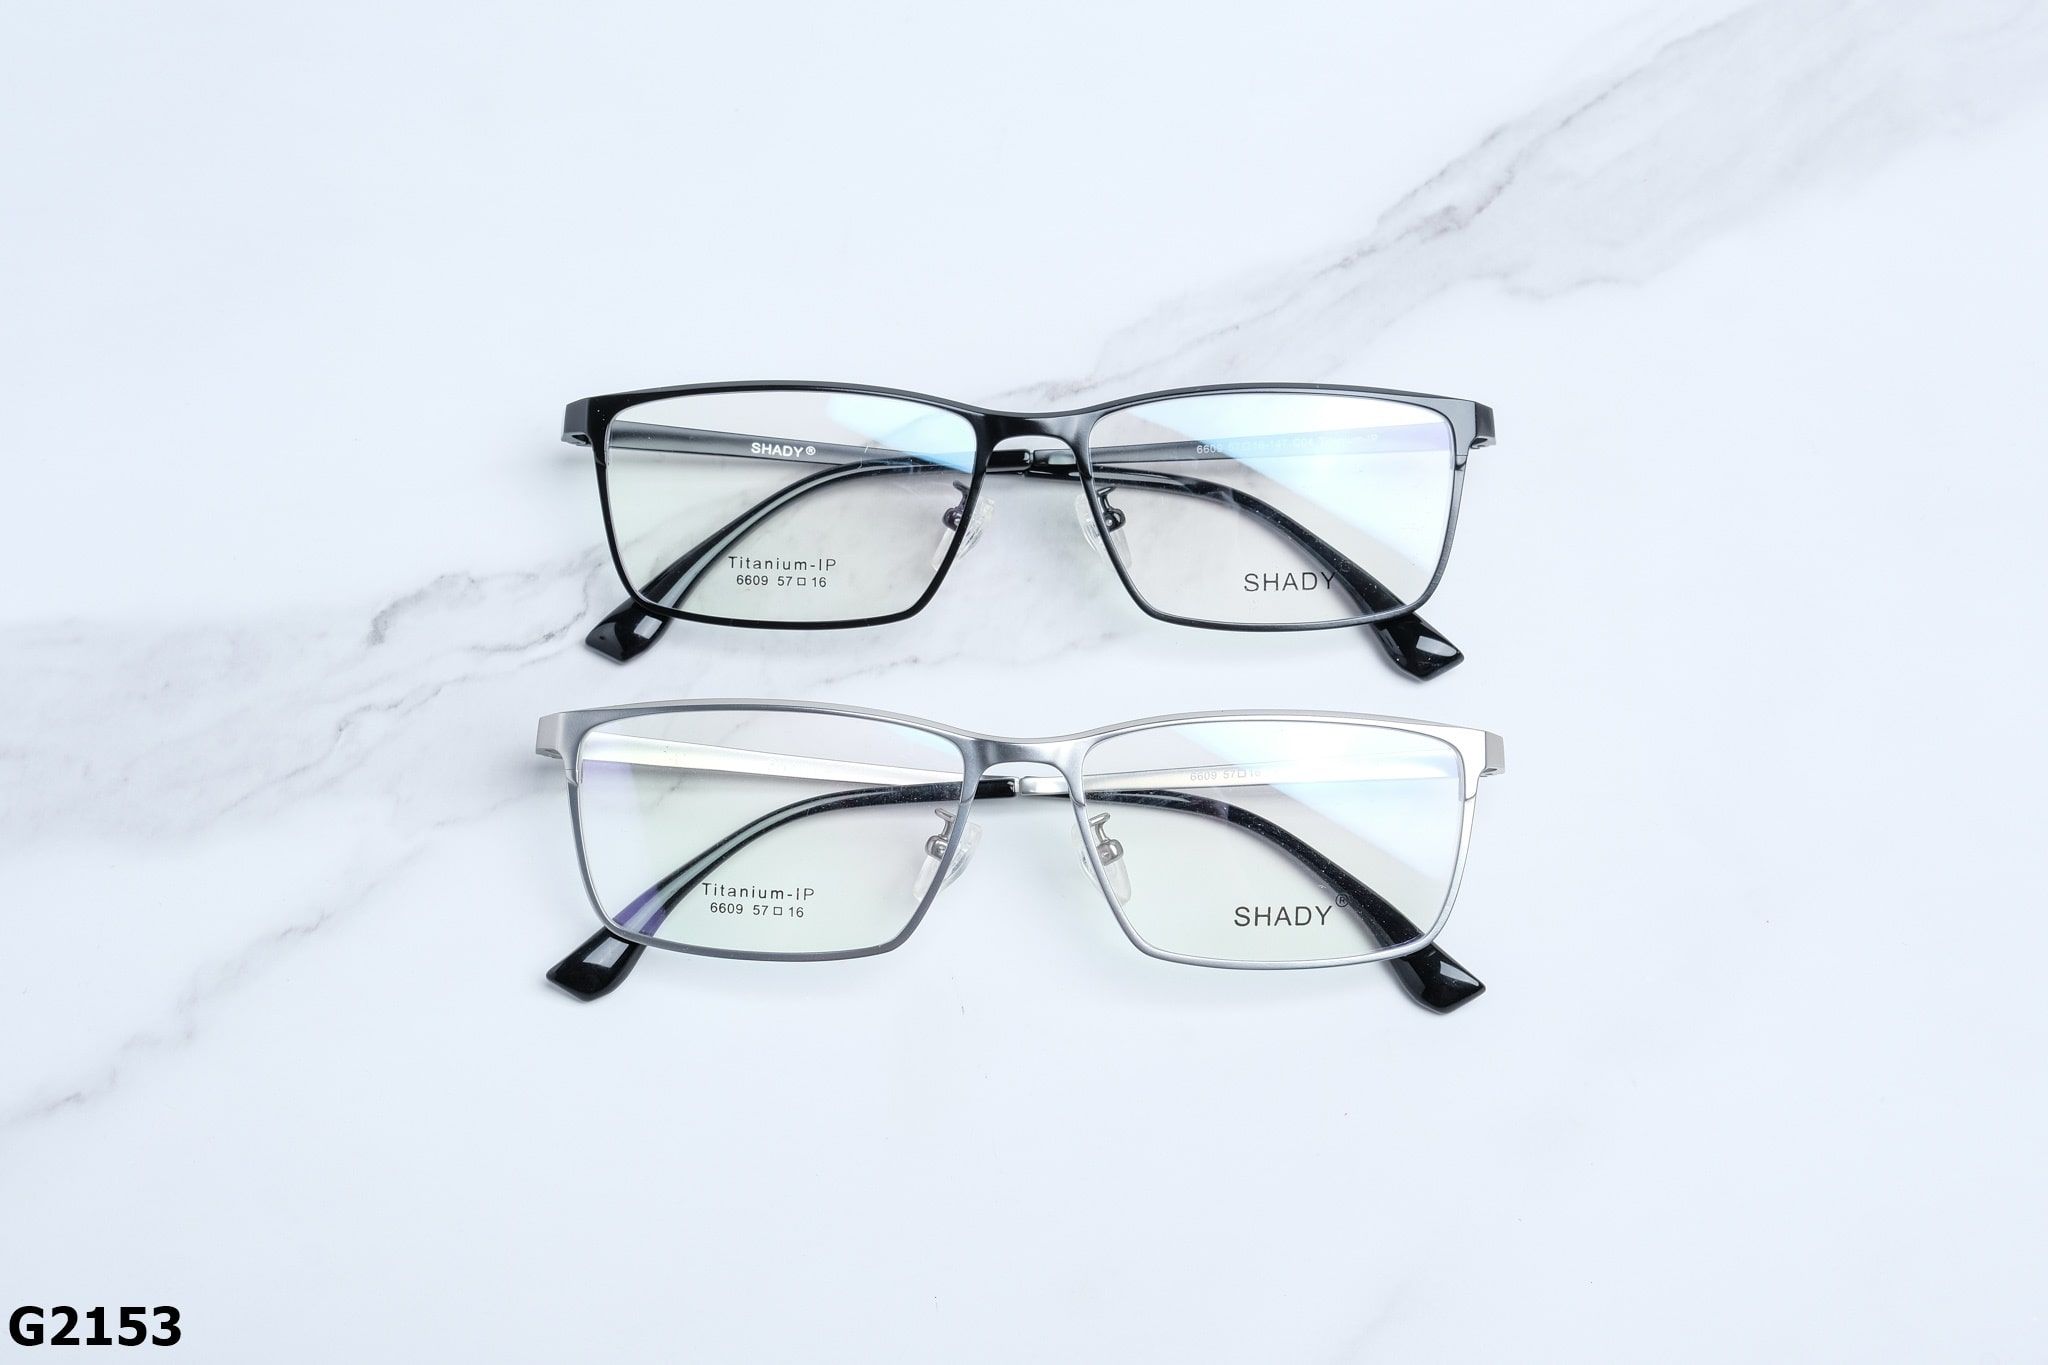  SHADY Eyewear - Glasses - G2153 